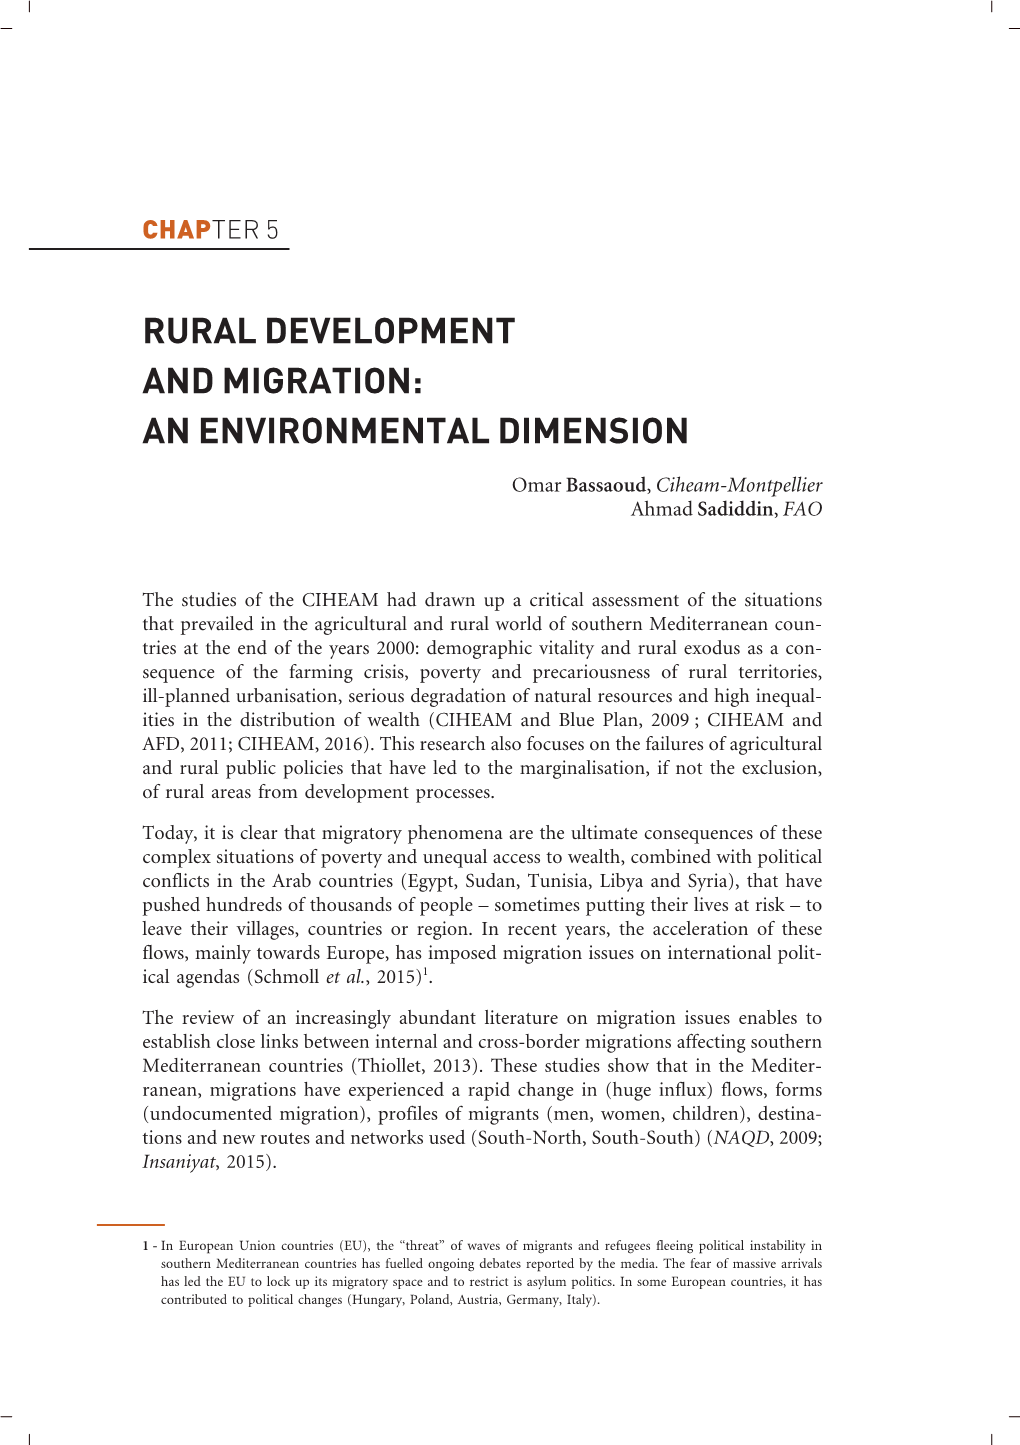 Rural Development and Migration: an Environmental Dimension